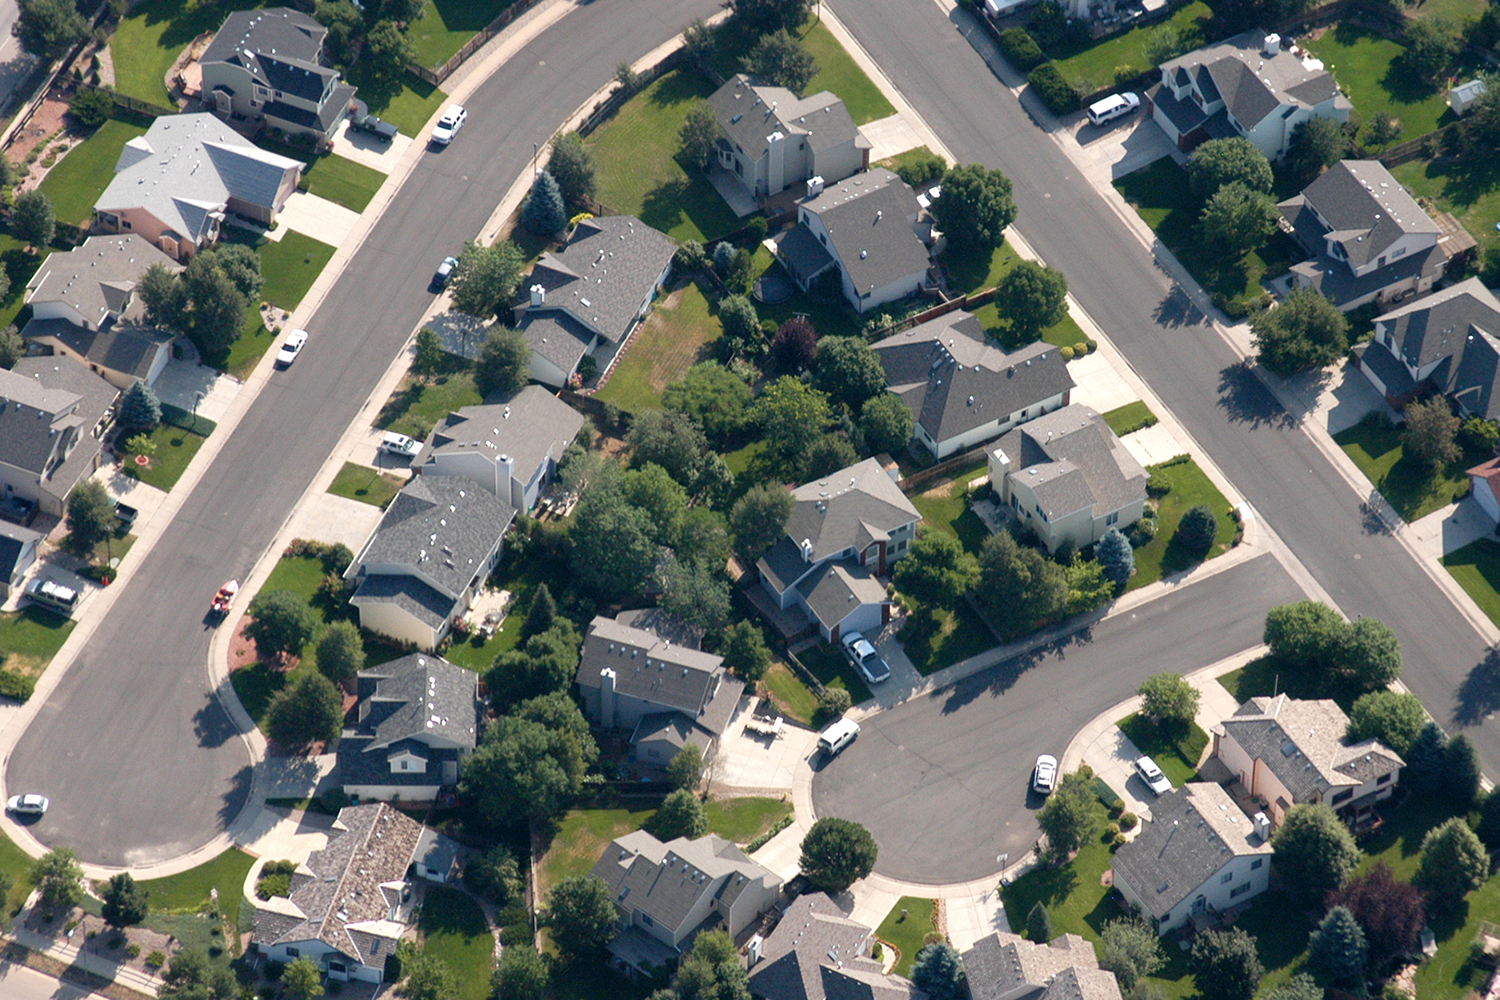 Aerial image of neighborhoods